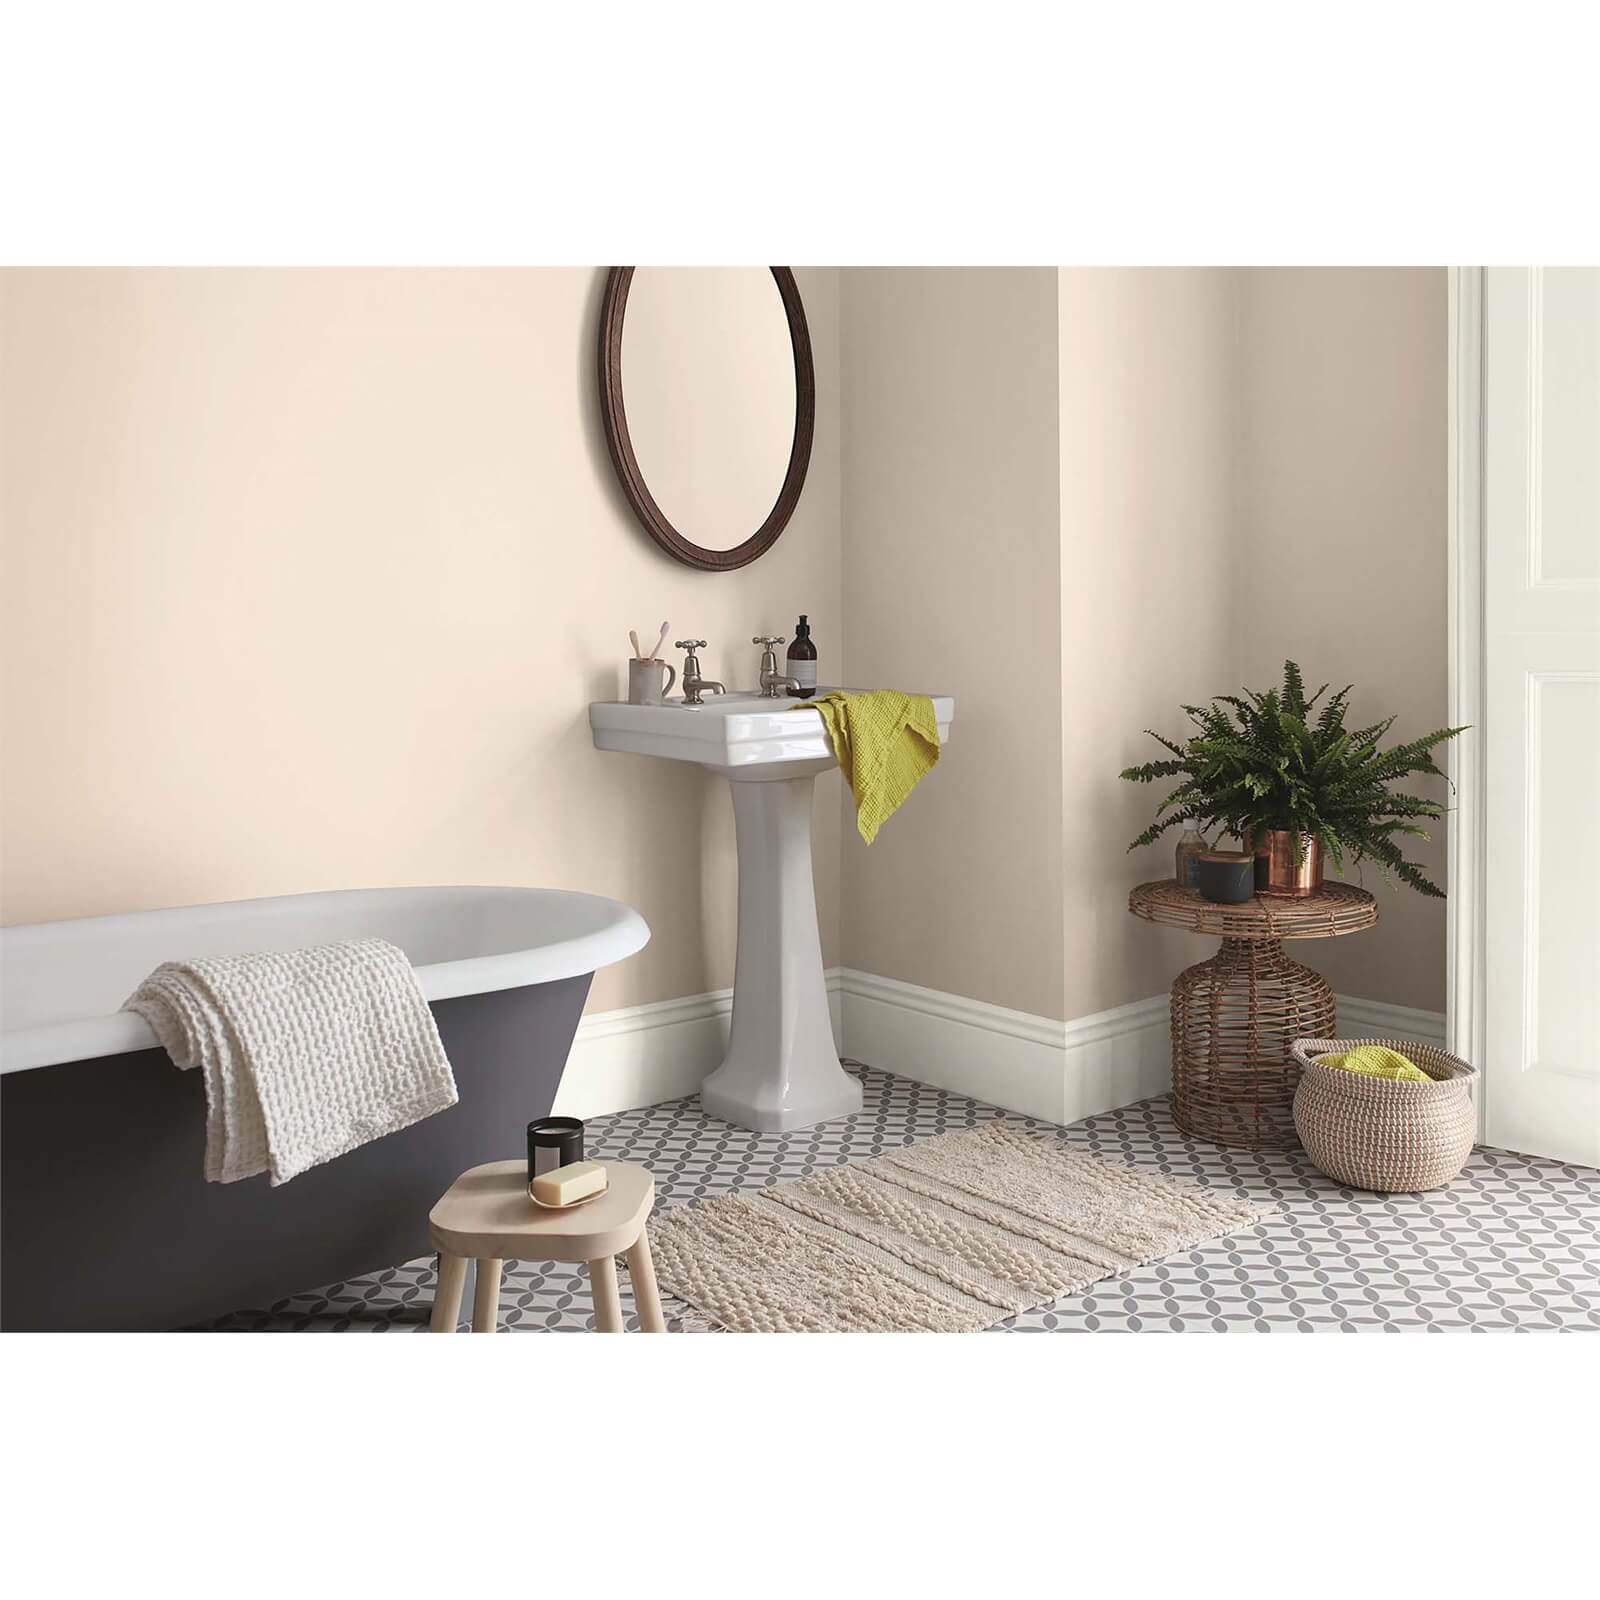 Dulux Easycare Bathroom Summer Linen Soft Sheen Paint - 2.5L